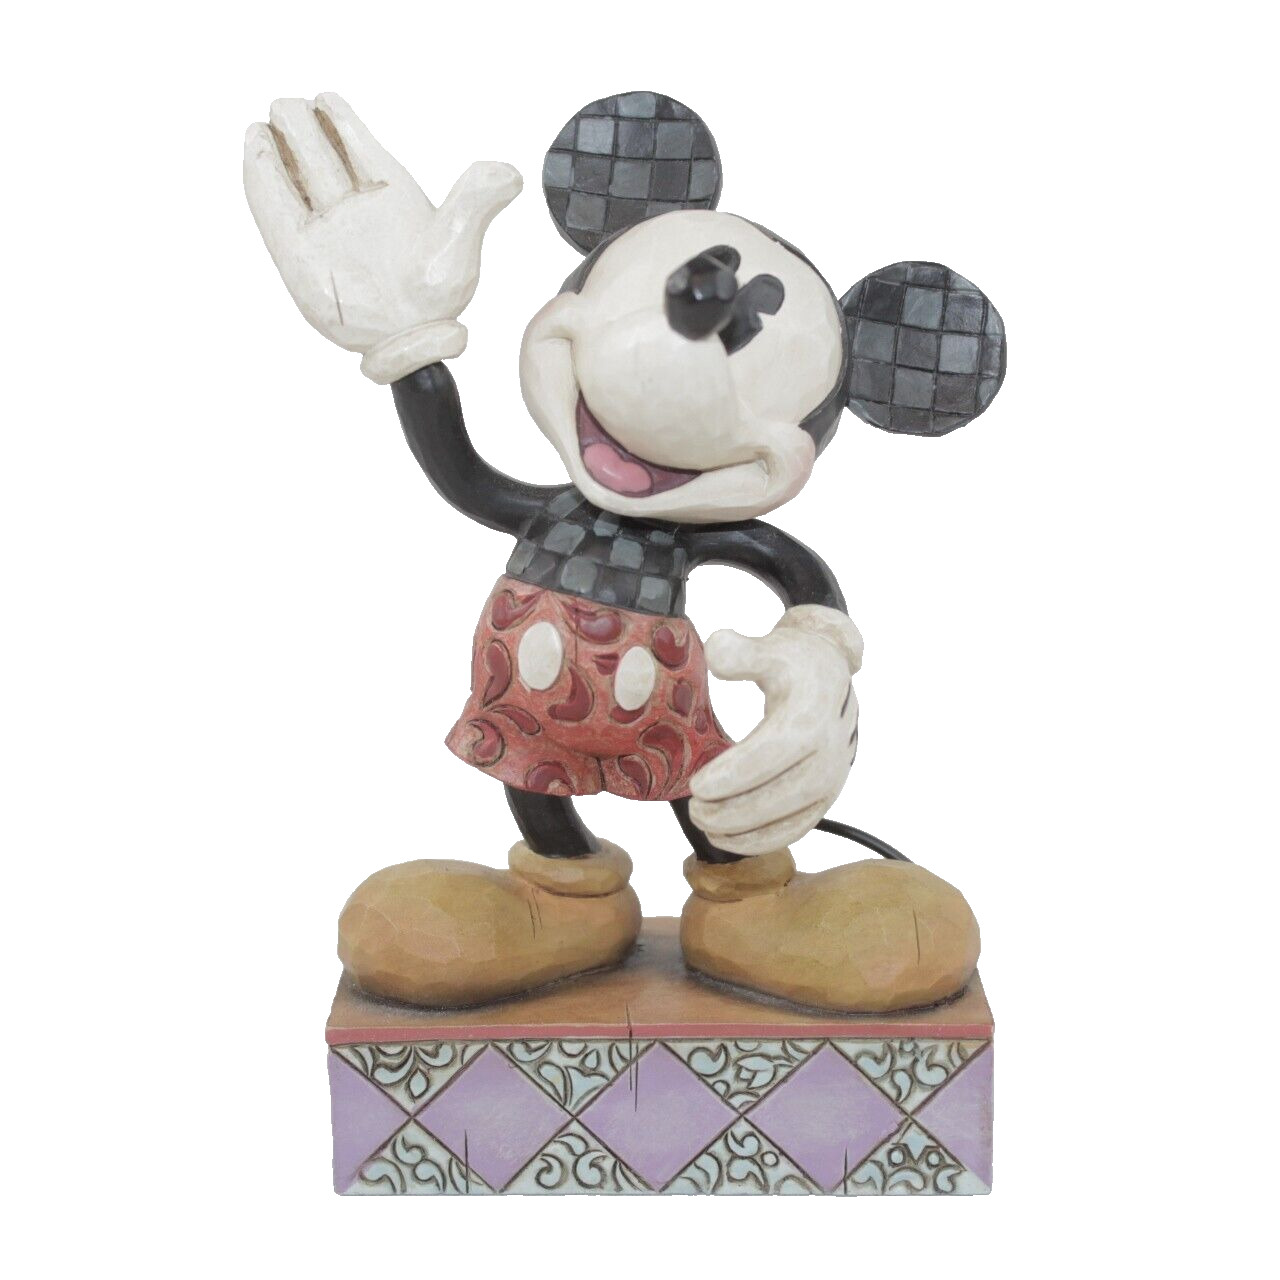 Jim Shore Walt Disney Showcase Collection Your Pal Mickey Mouse Figurine Enesco